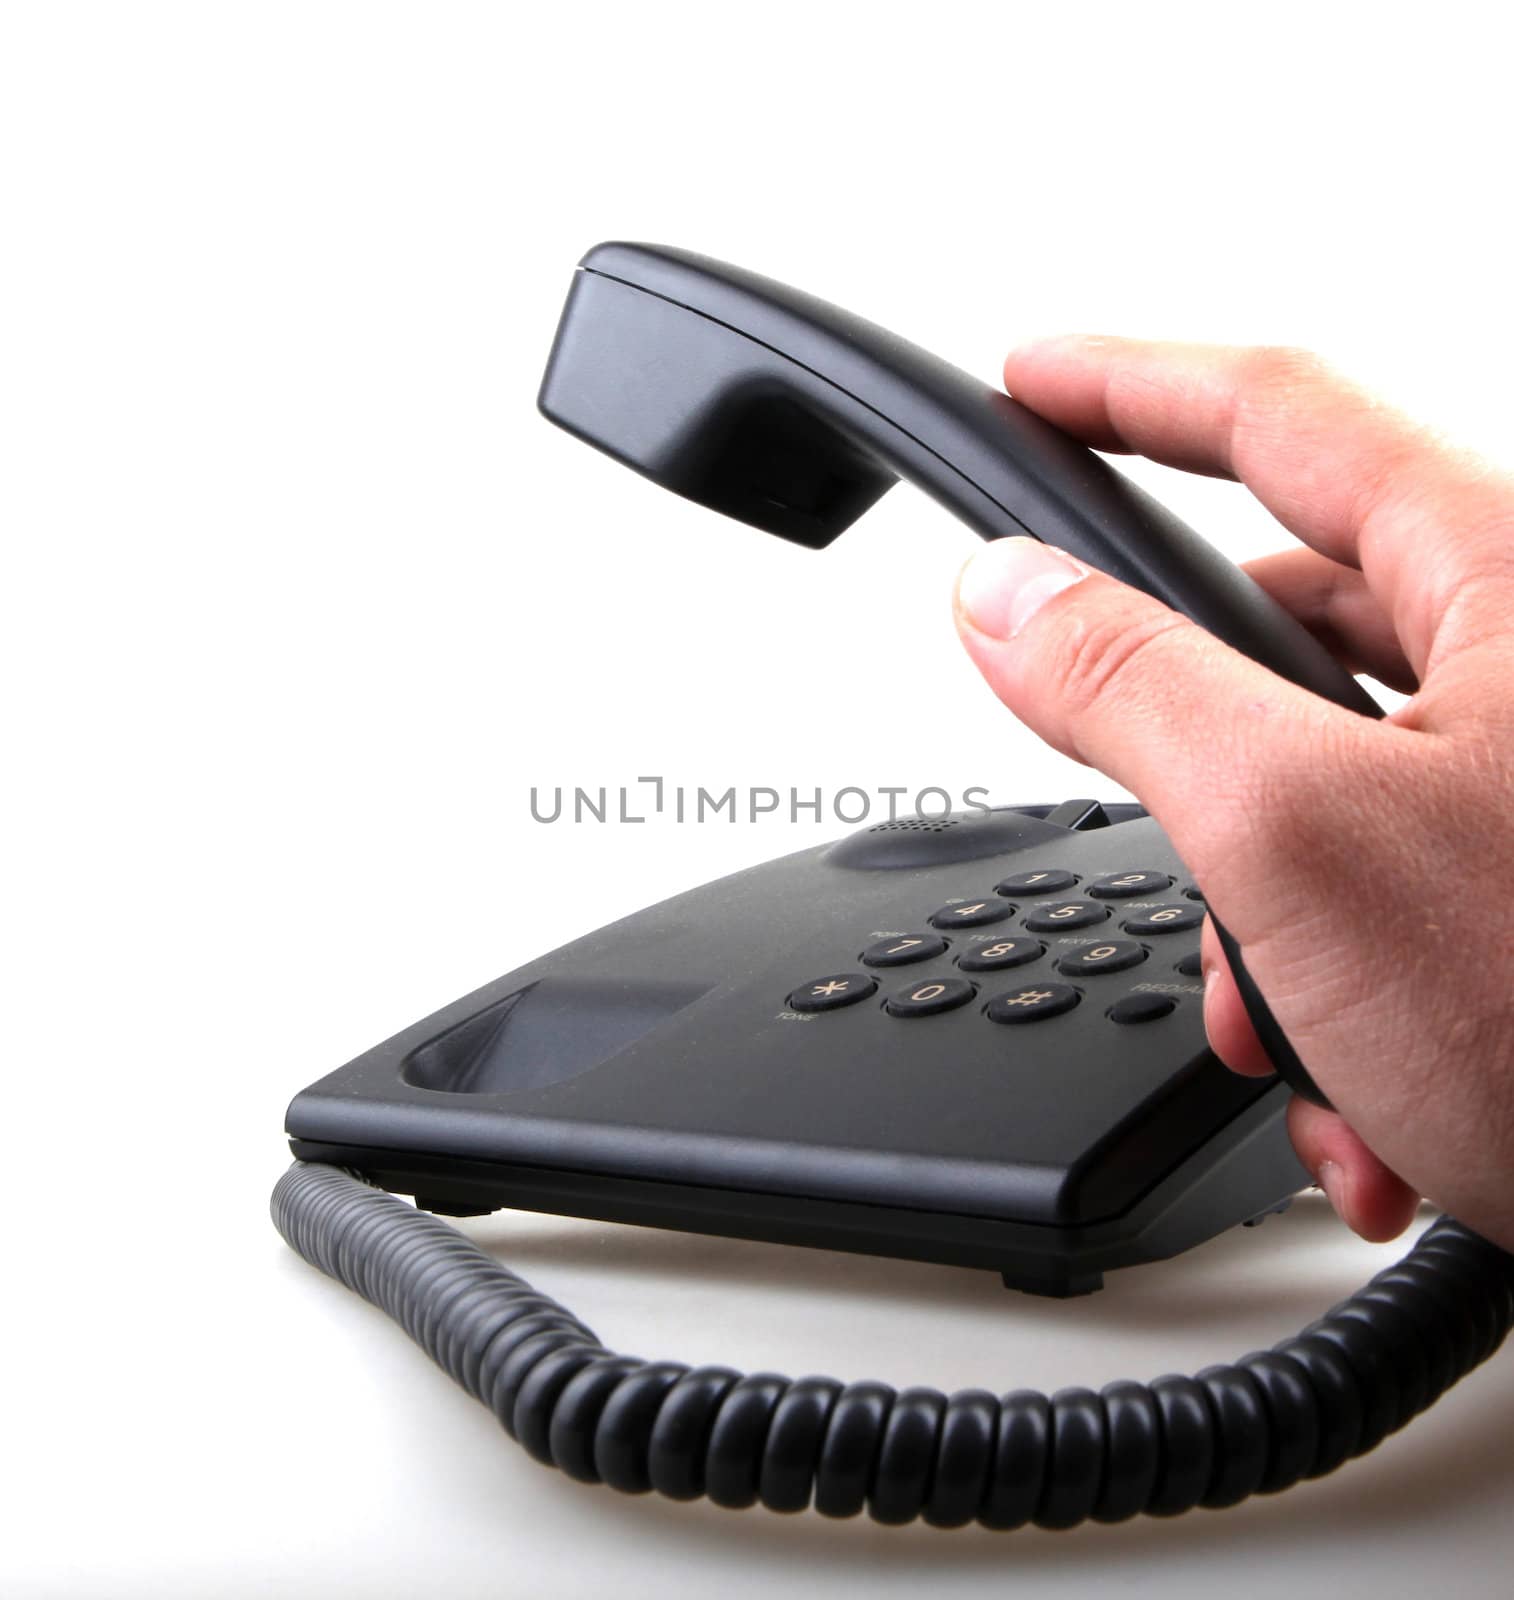  telephone isolated over white background by nenov